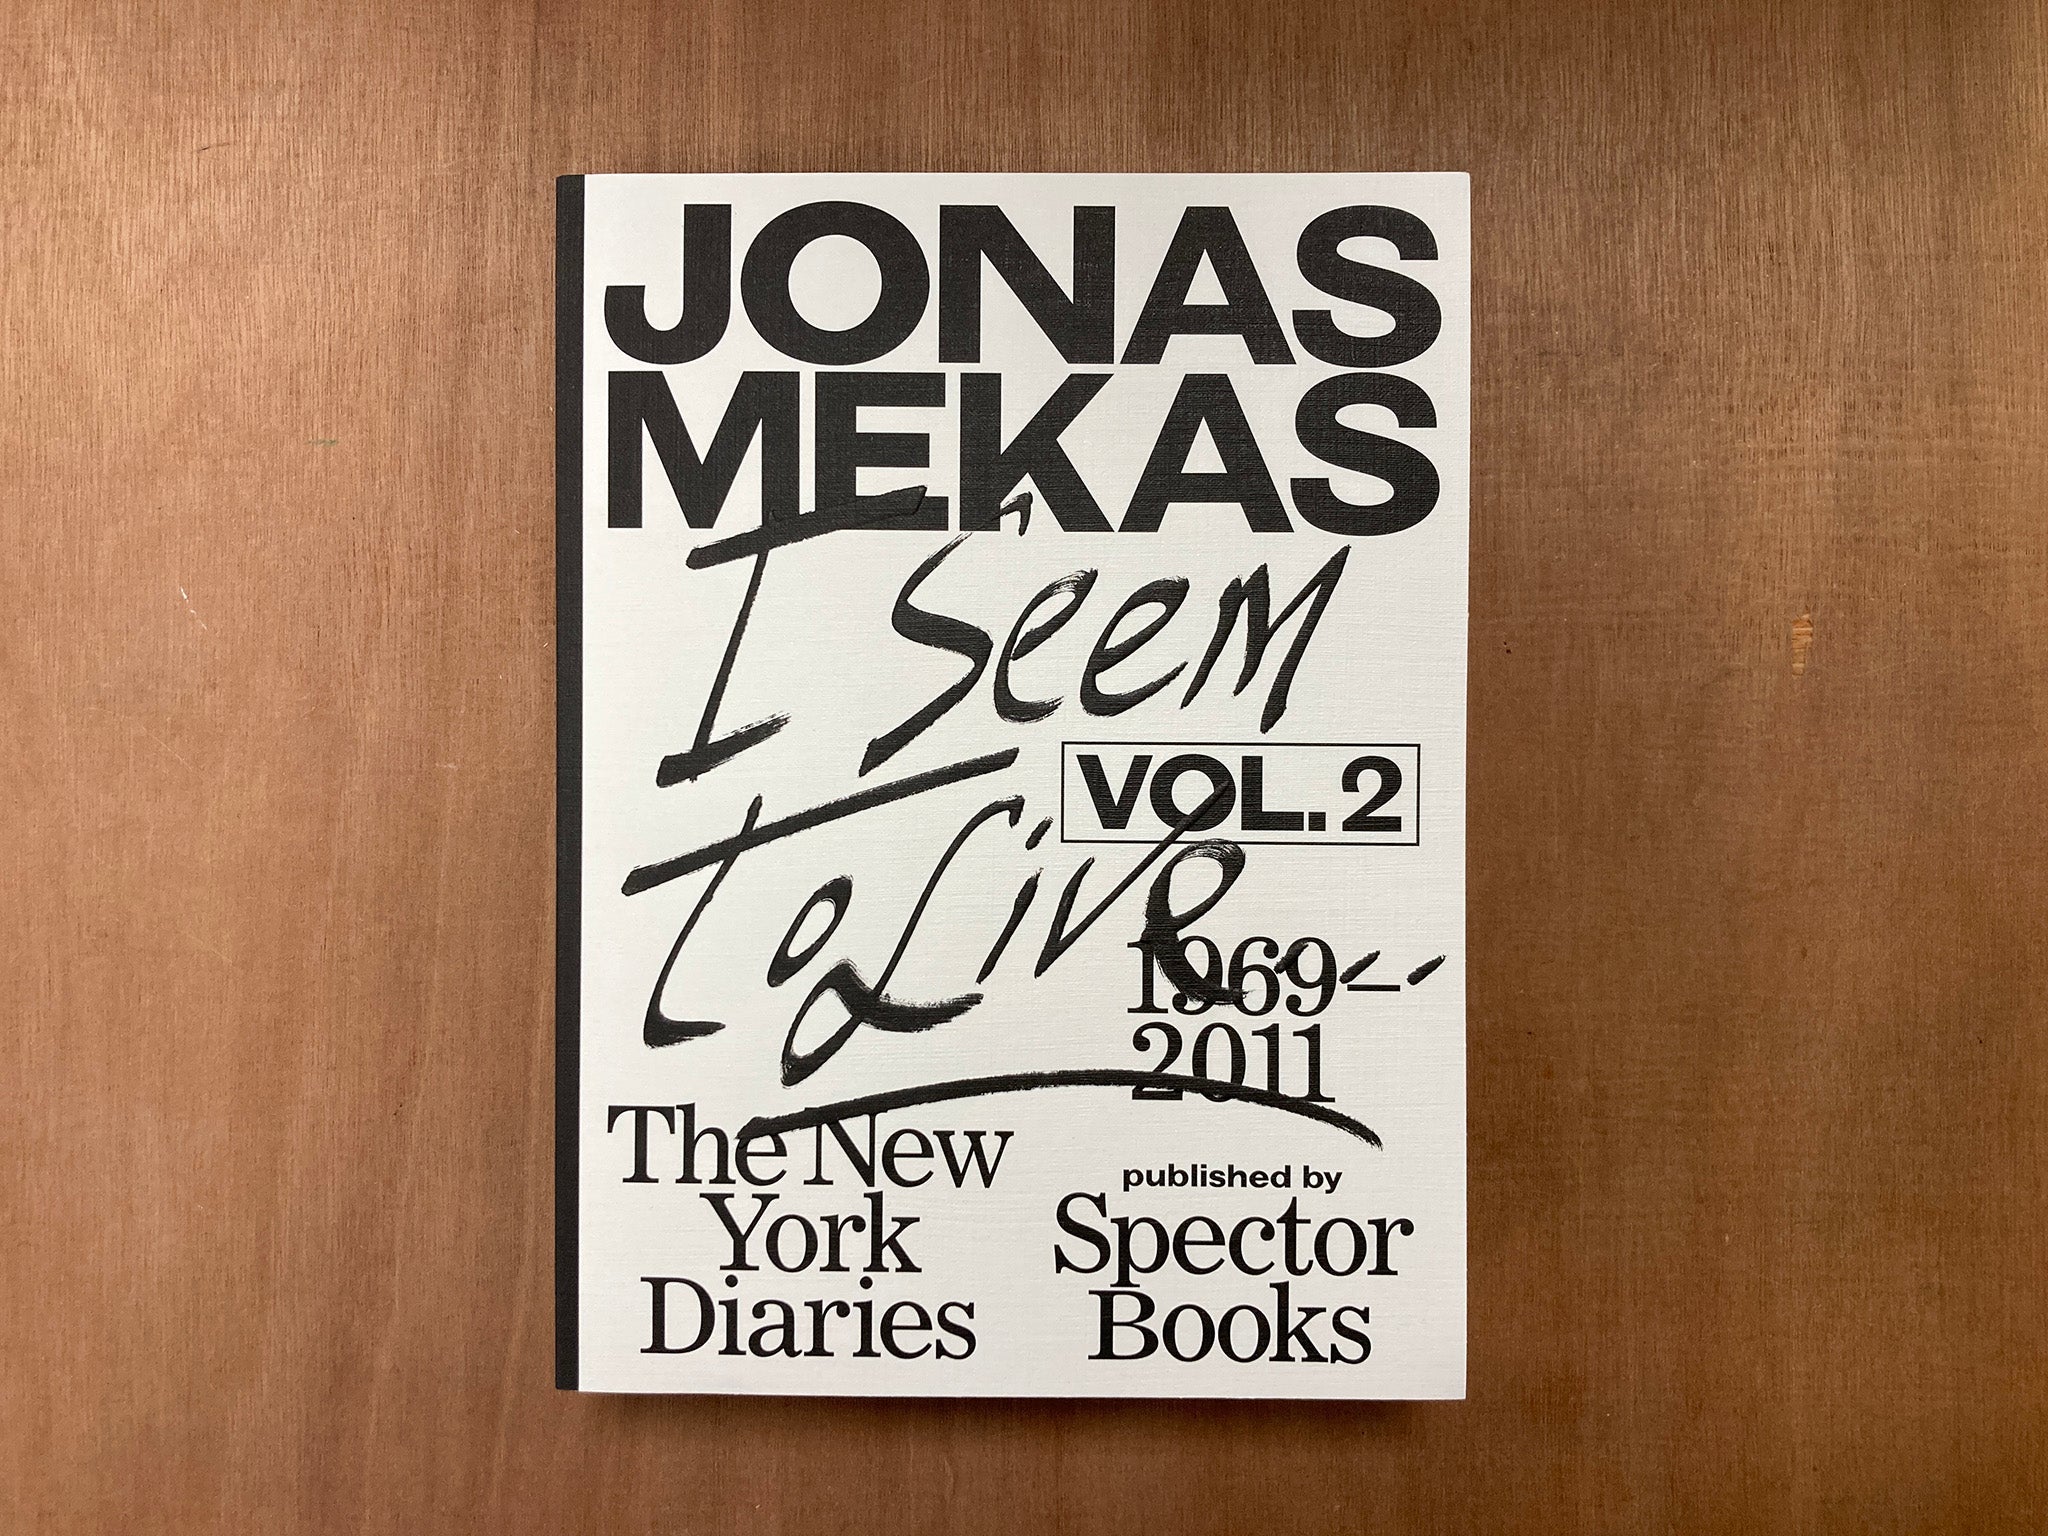 I SEEM TO LIVE: THE NEW YORK DIARIES. VOL.2 1969-2011 by Jonas Mekas